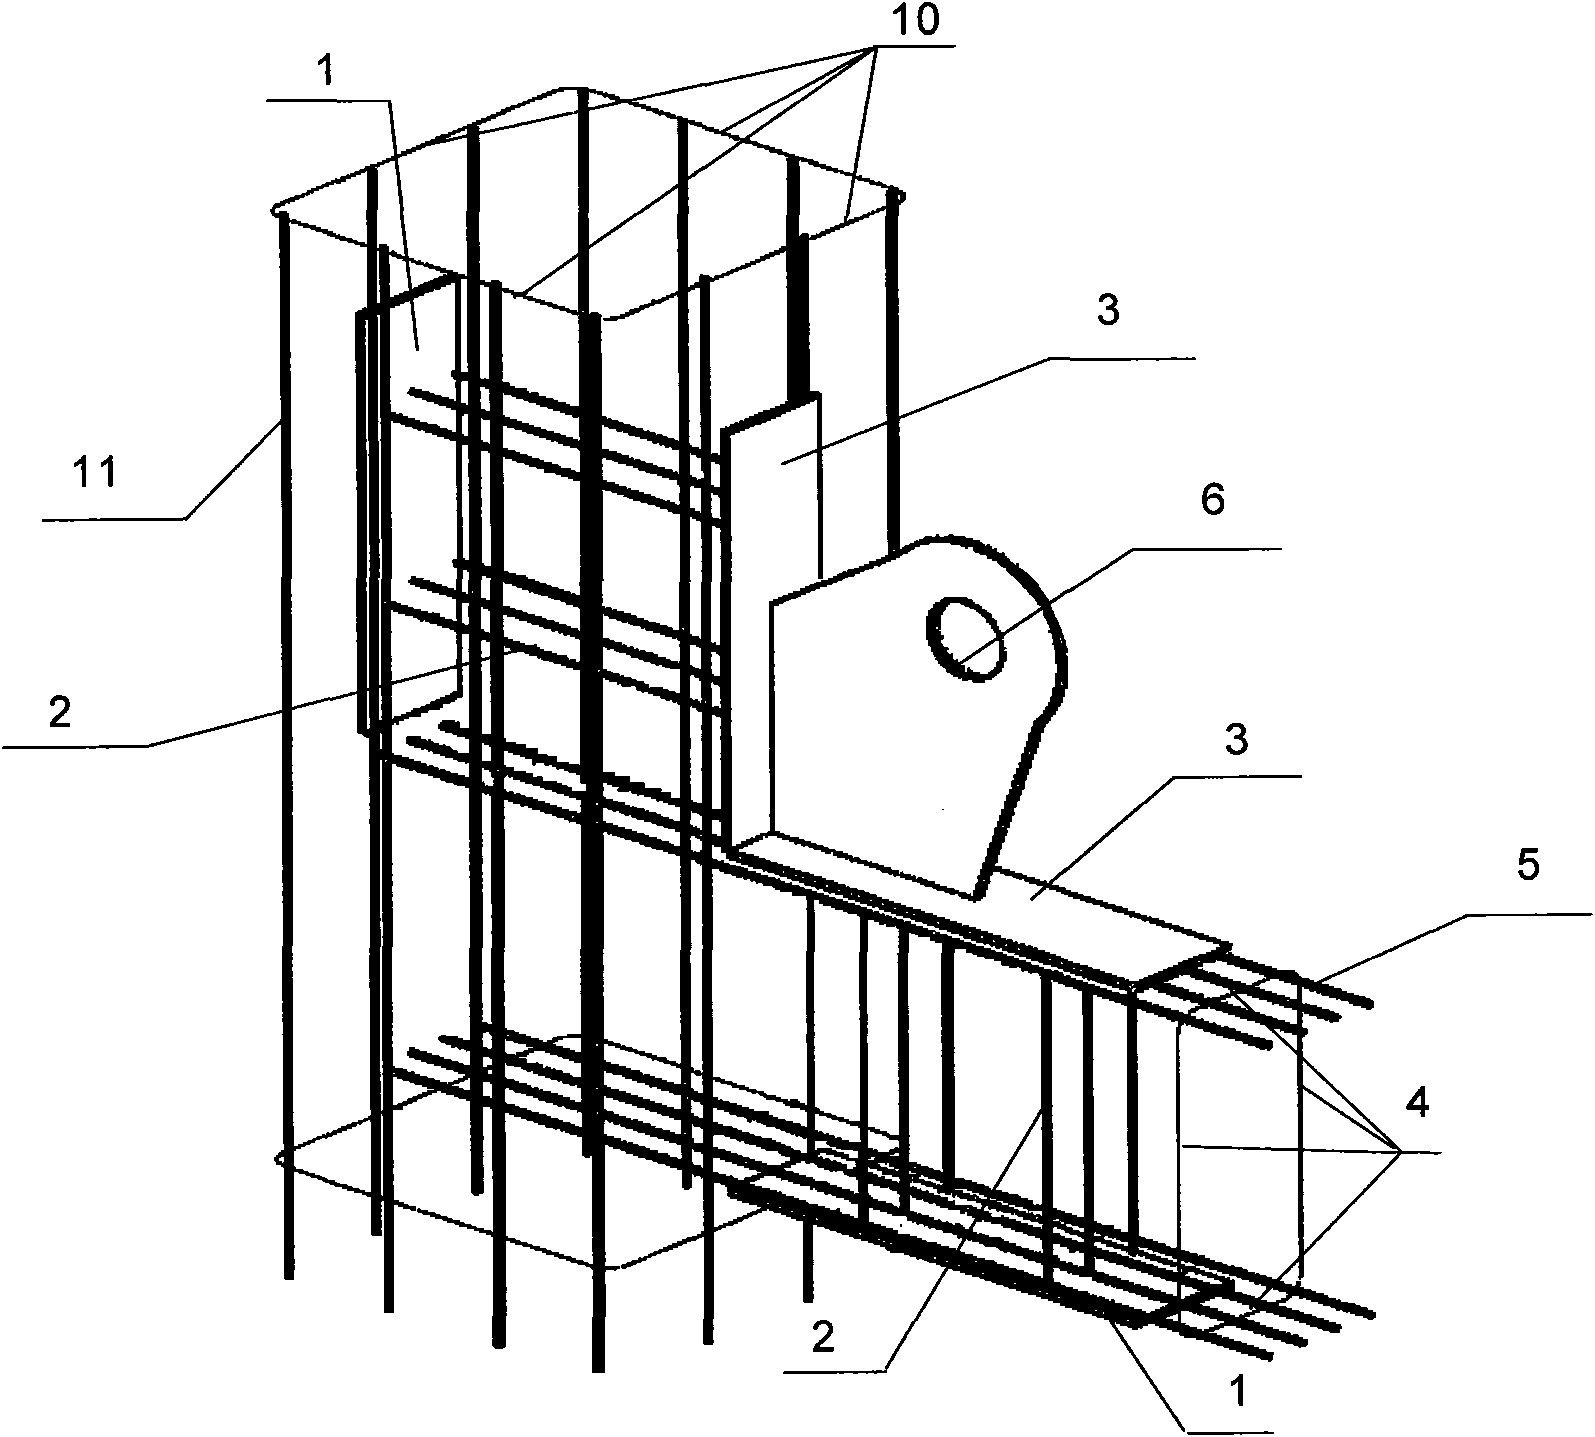 Vertical reinforced concrete component-connection node for buckling-restrained brace